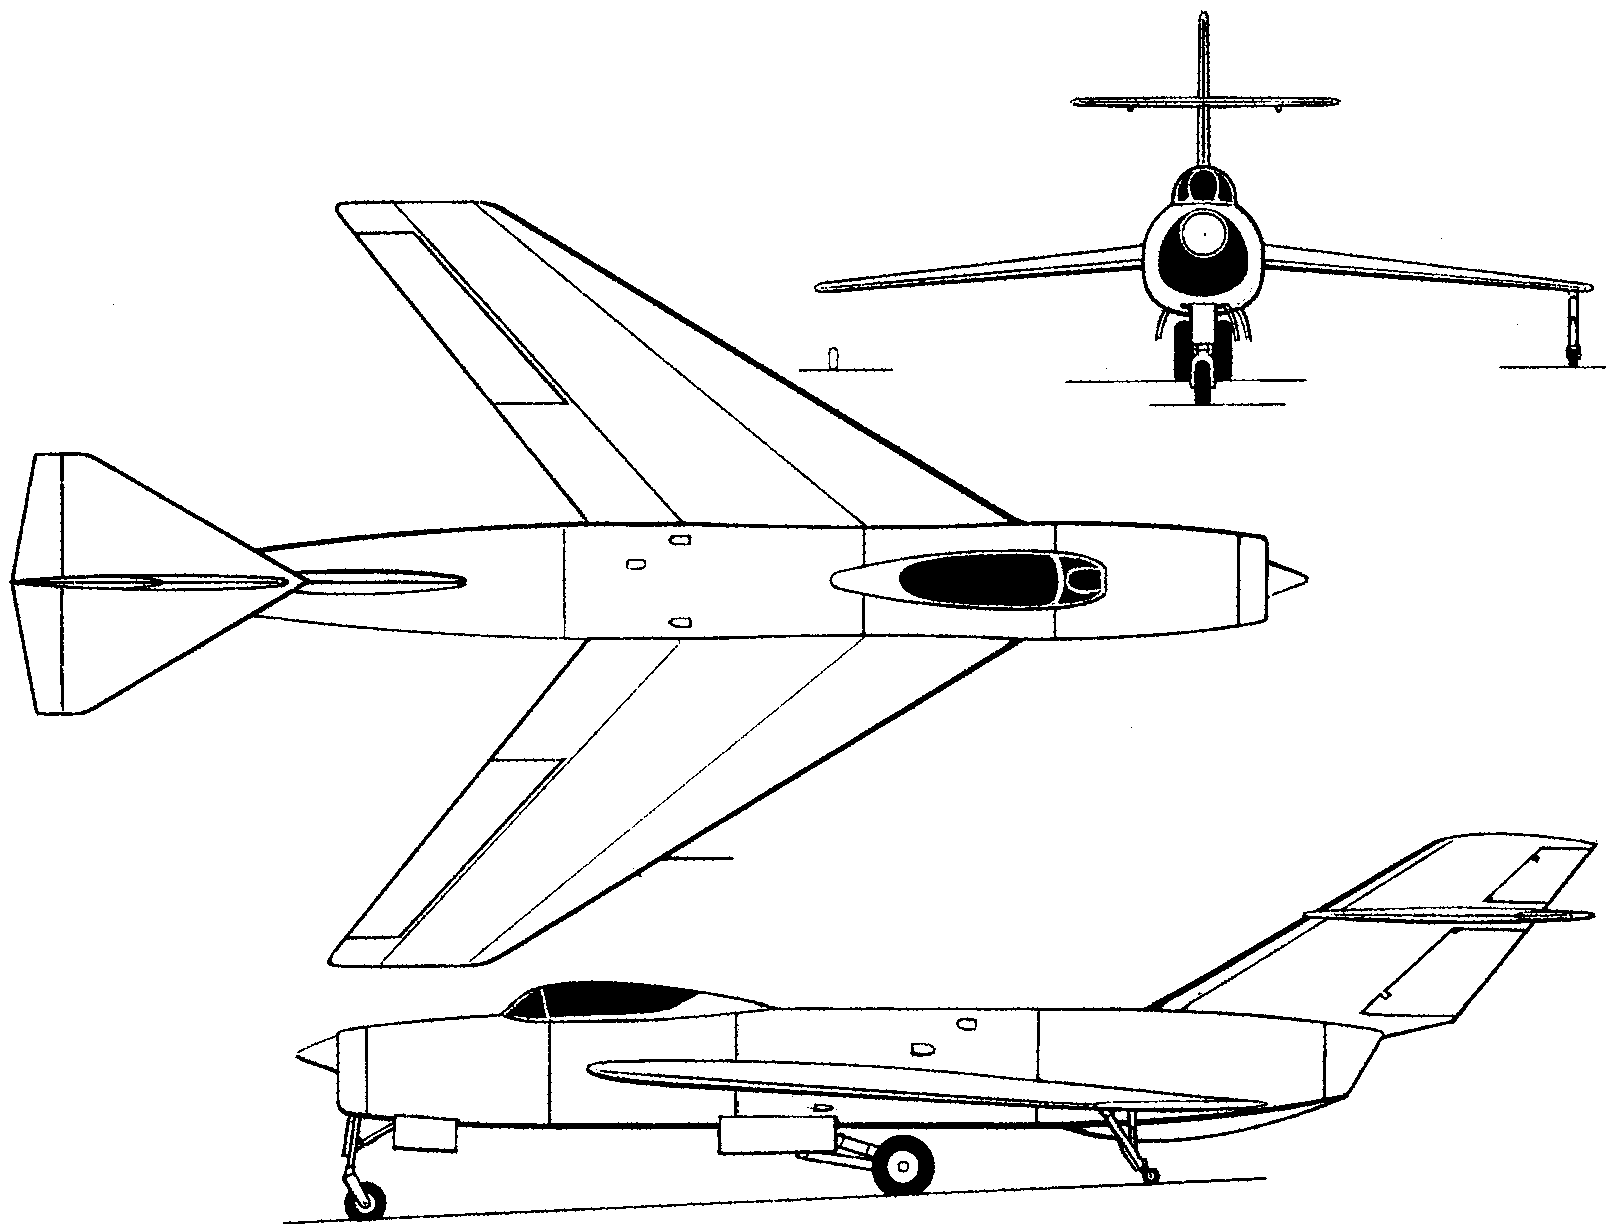 La-190 blueprint